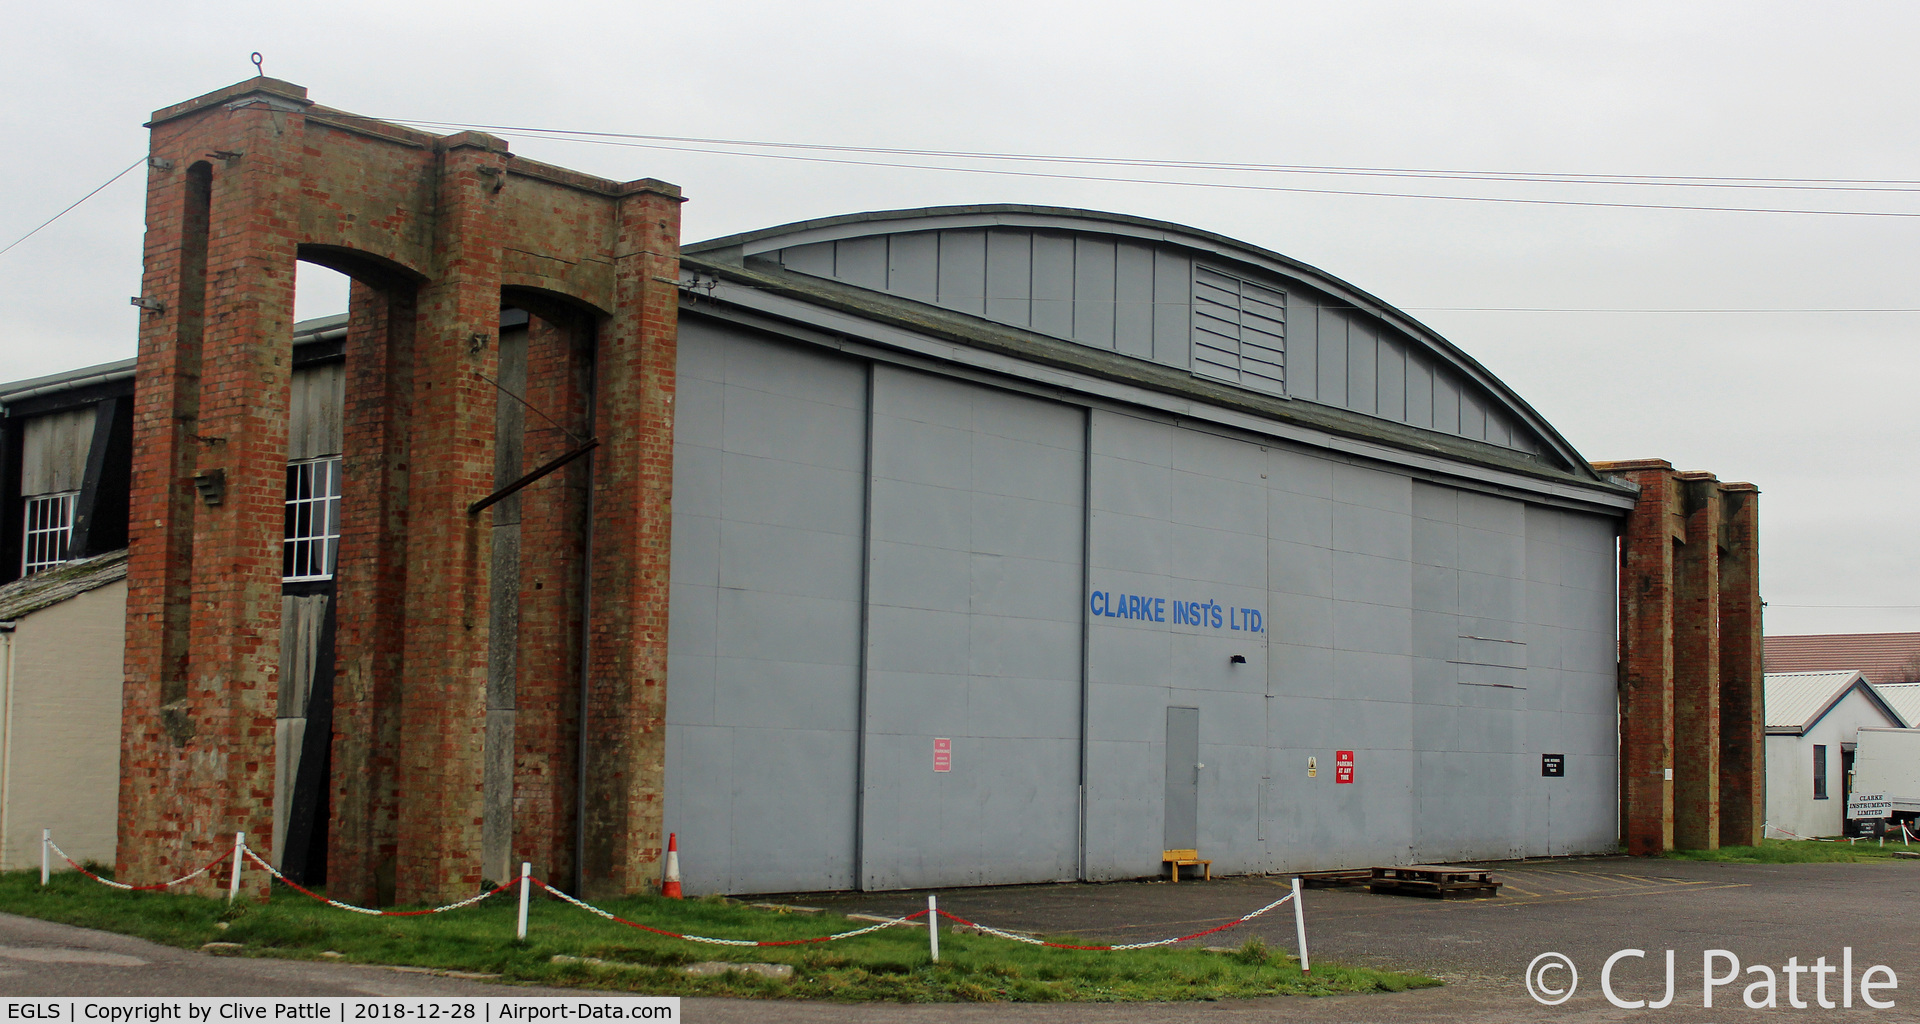 Old Sarum Airfield Airport, Salisbury, England United Kingdom (EGLS) - One of the WWII hangars at Old Sarum